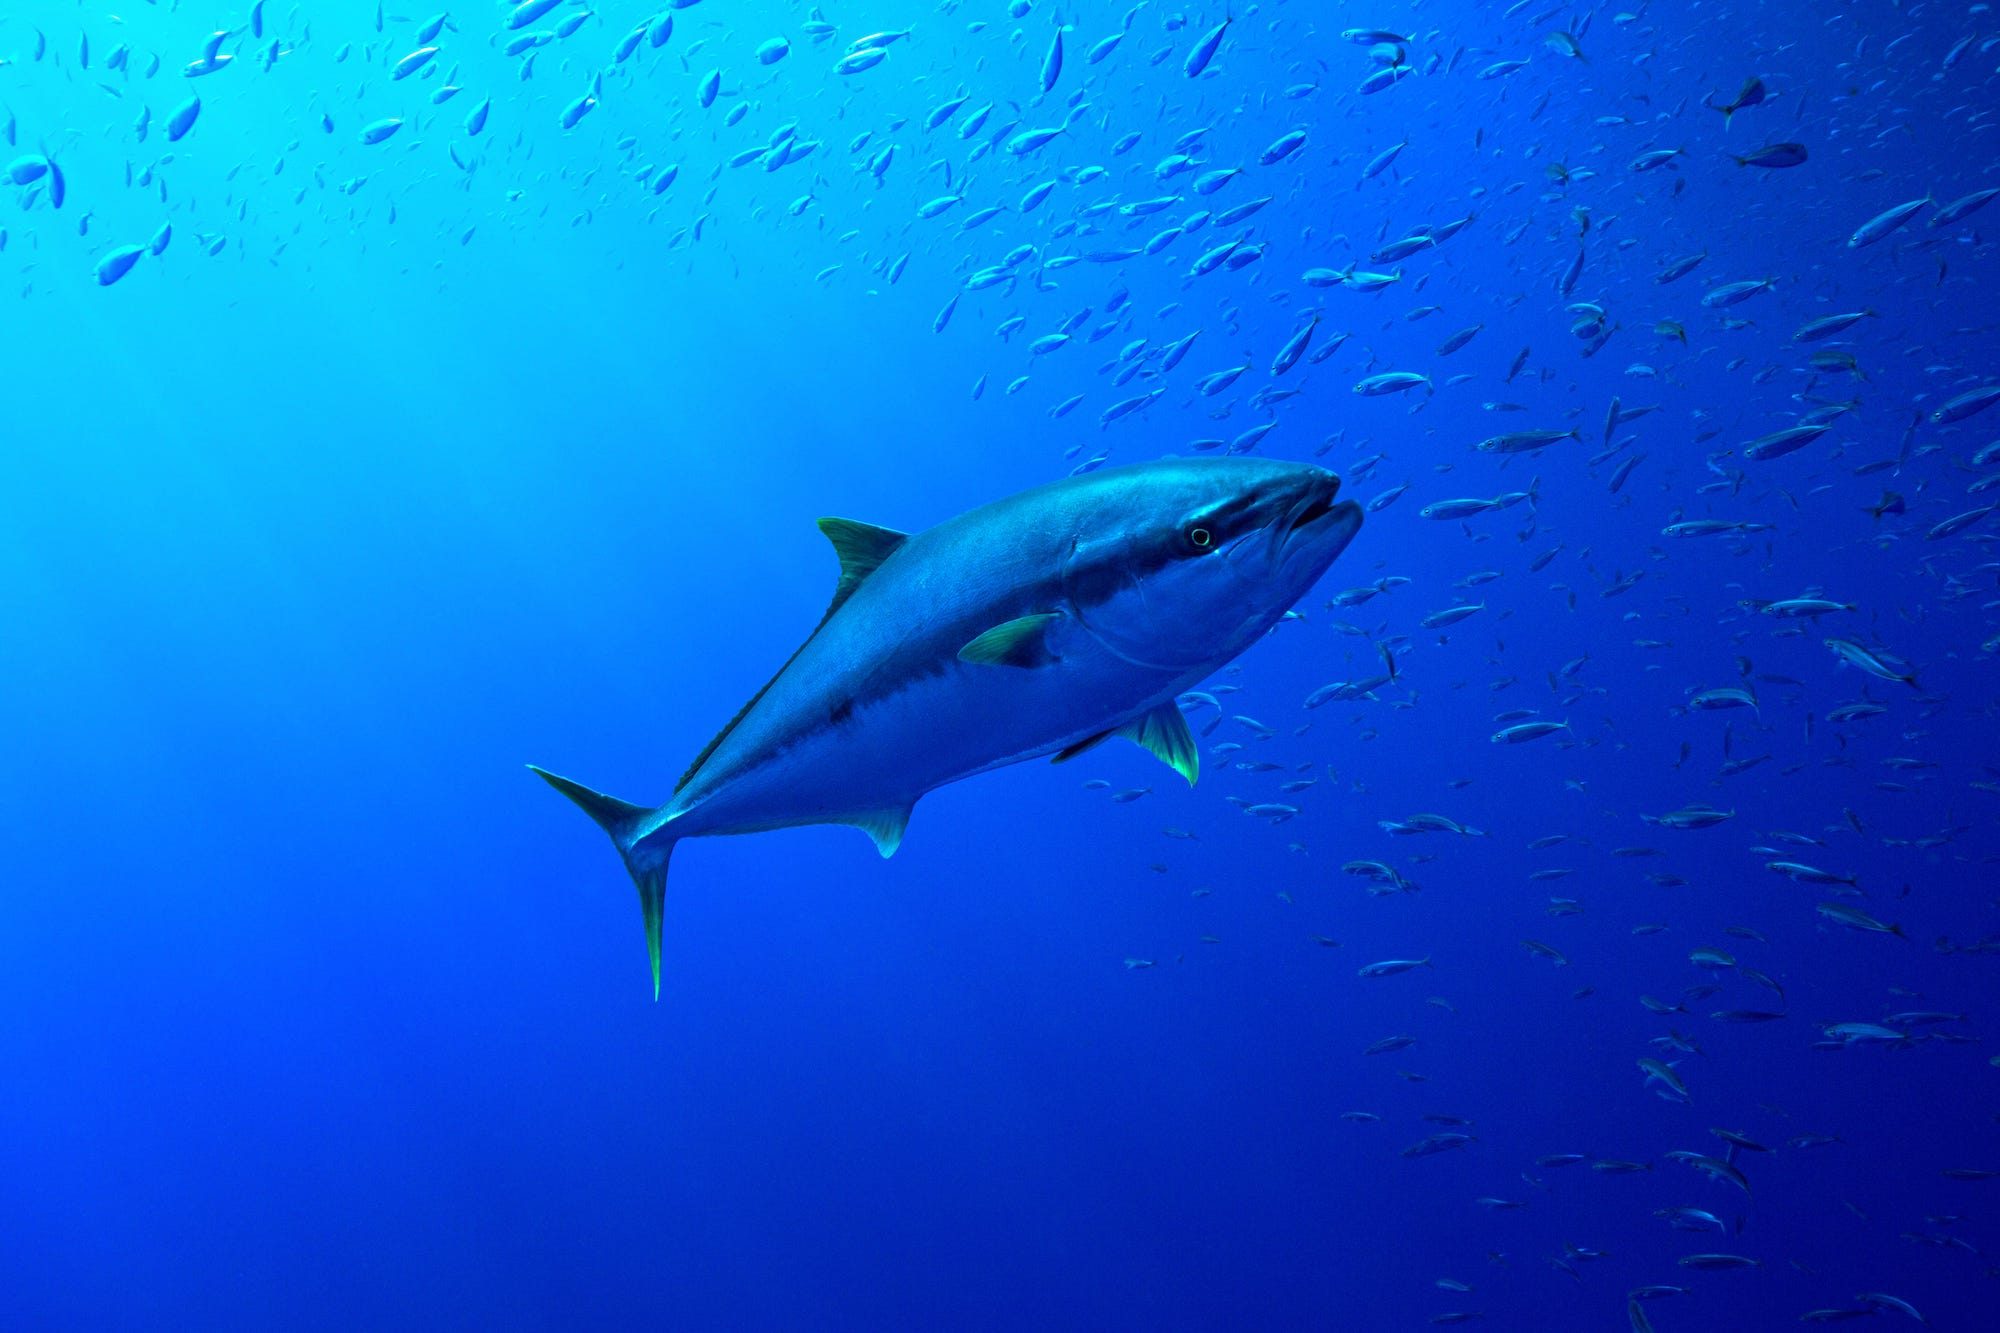 Image shows tuna swimming in ocean.